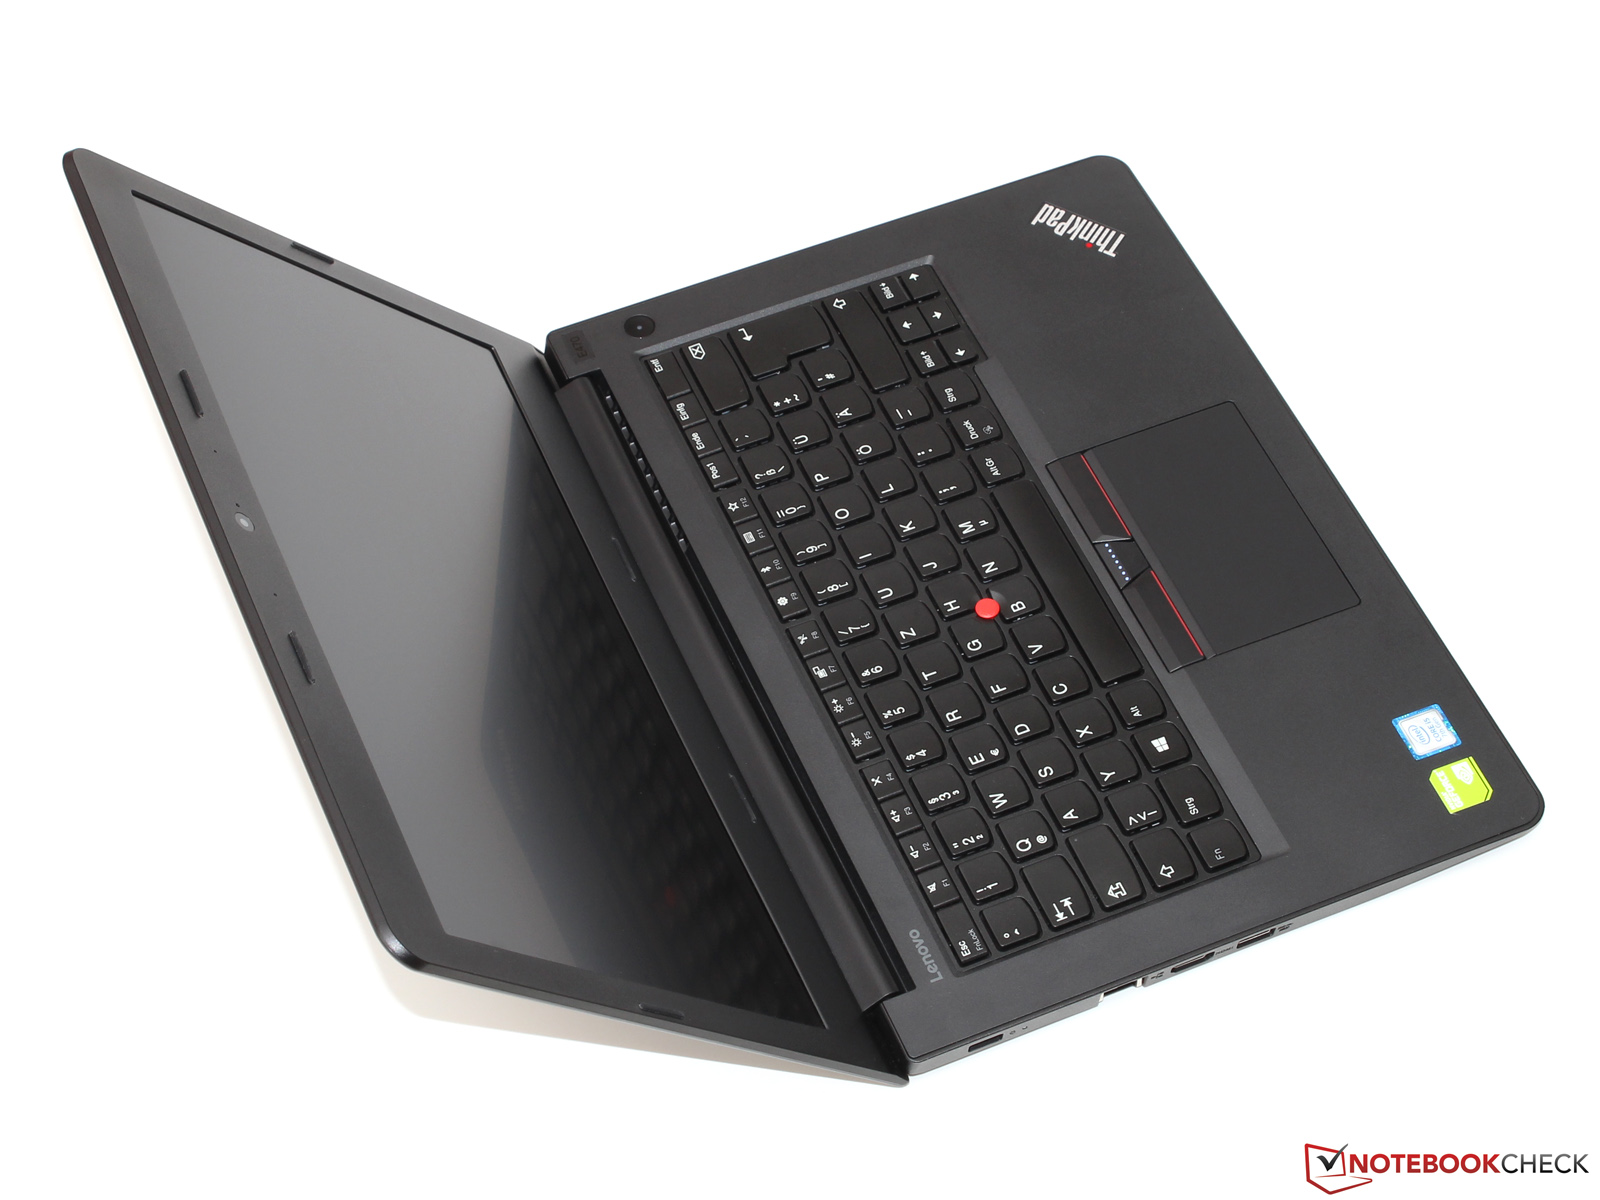  Laptop LENOVO THINKPAD E470 (20H2S00400) CORE I5 7200U 8G 256G SSD VGA 2G  Ges5